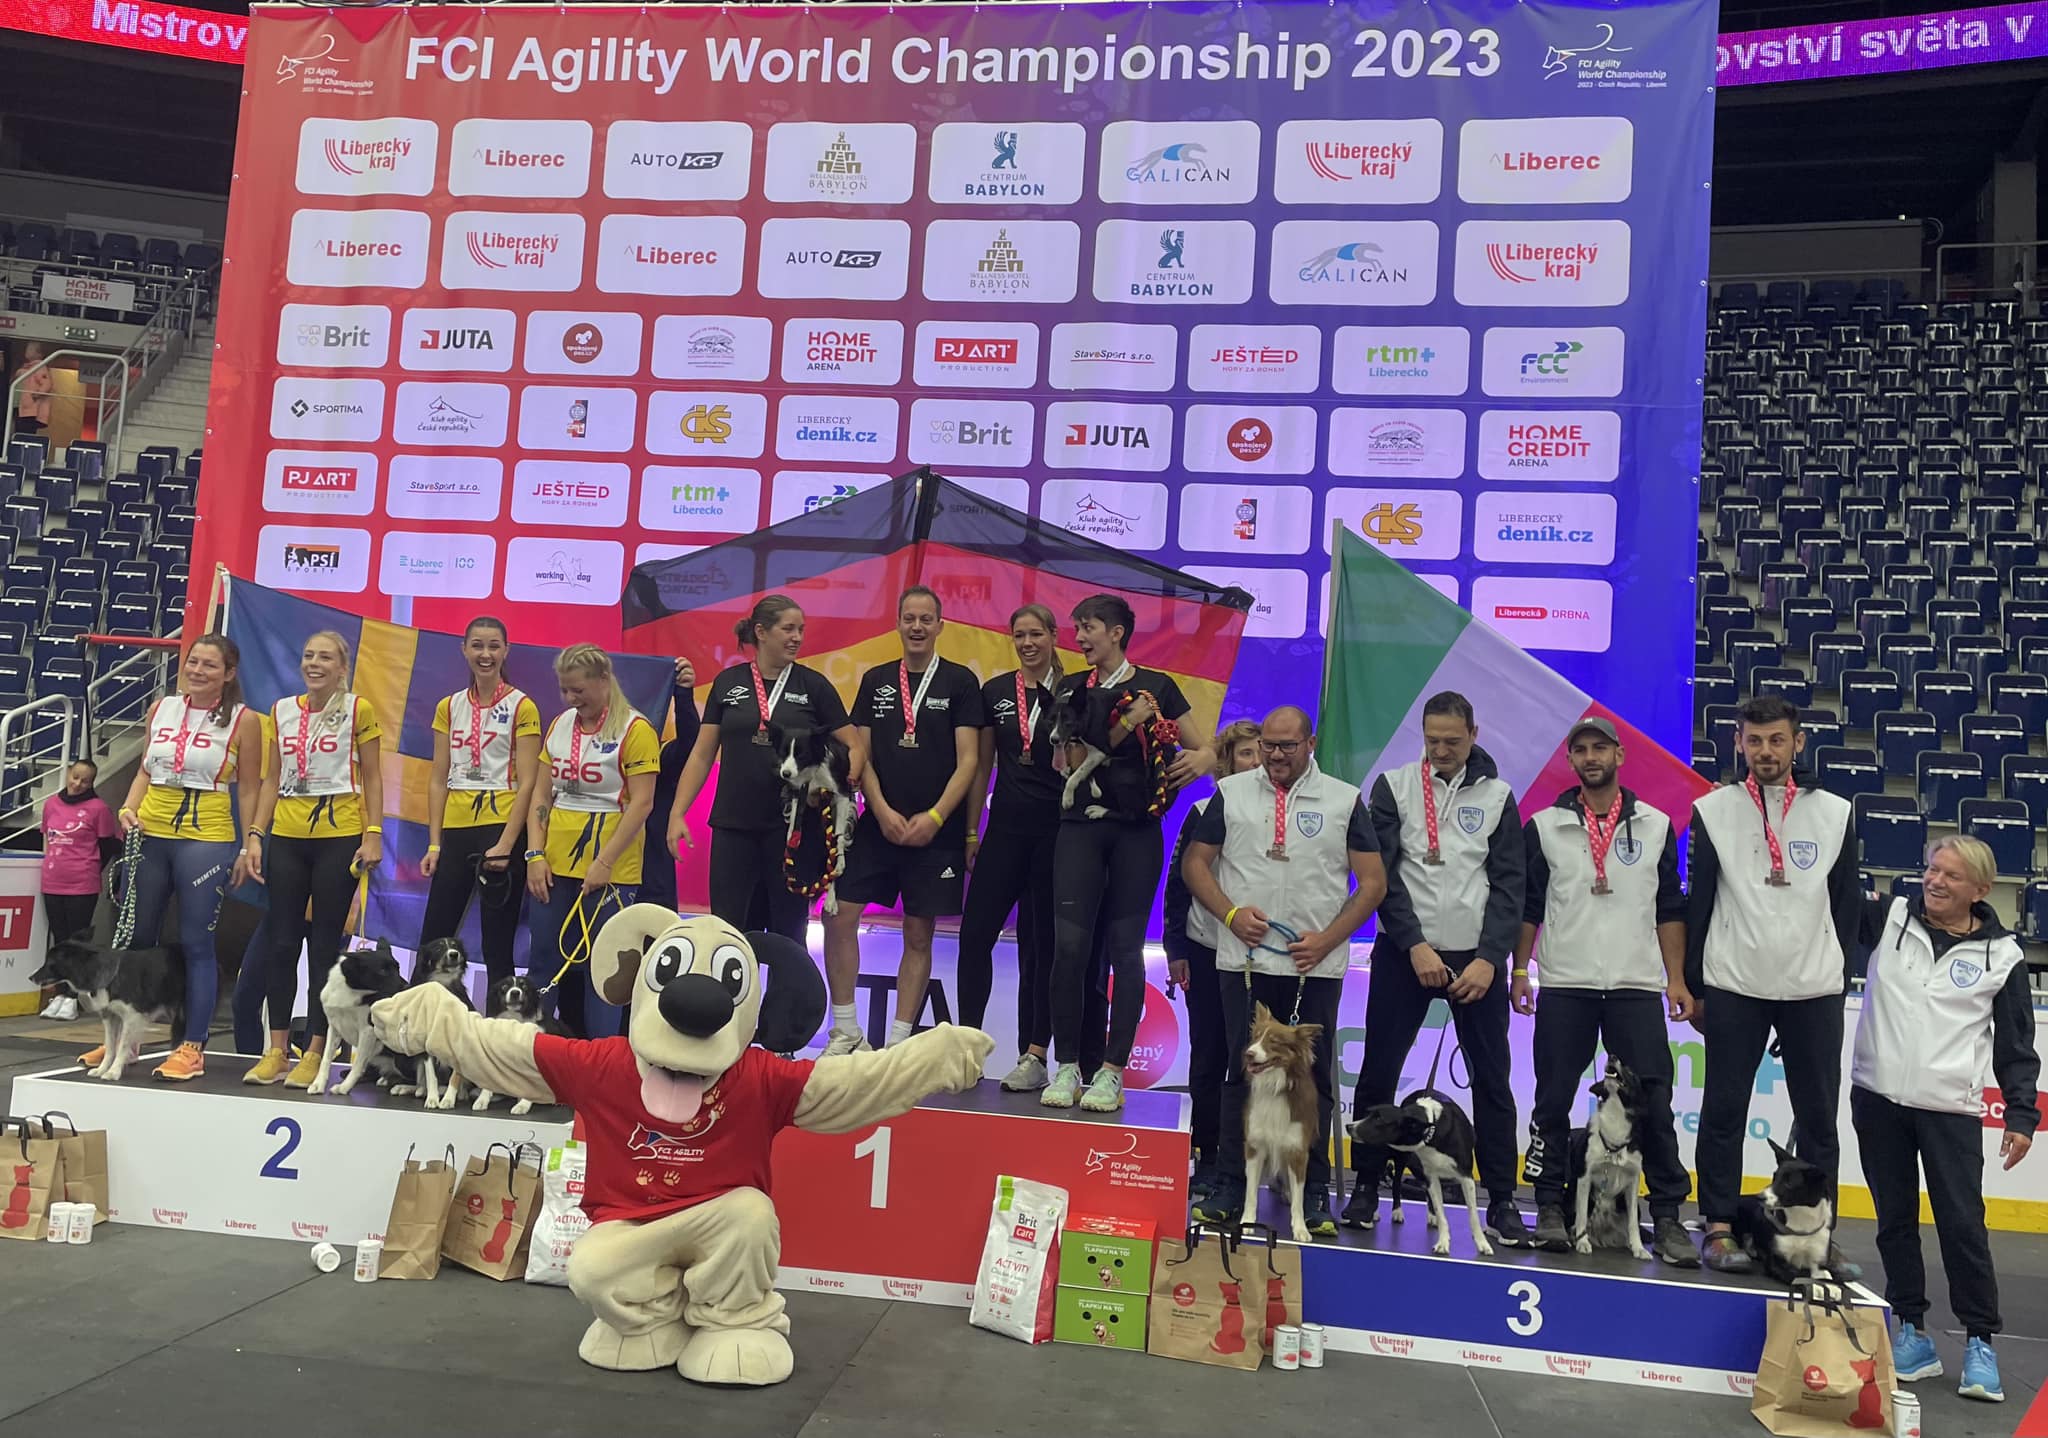 Seletiva para o FCI Agility World Championship 2023 – Brasil Agility